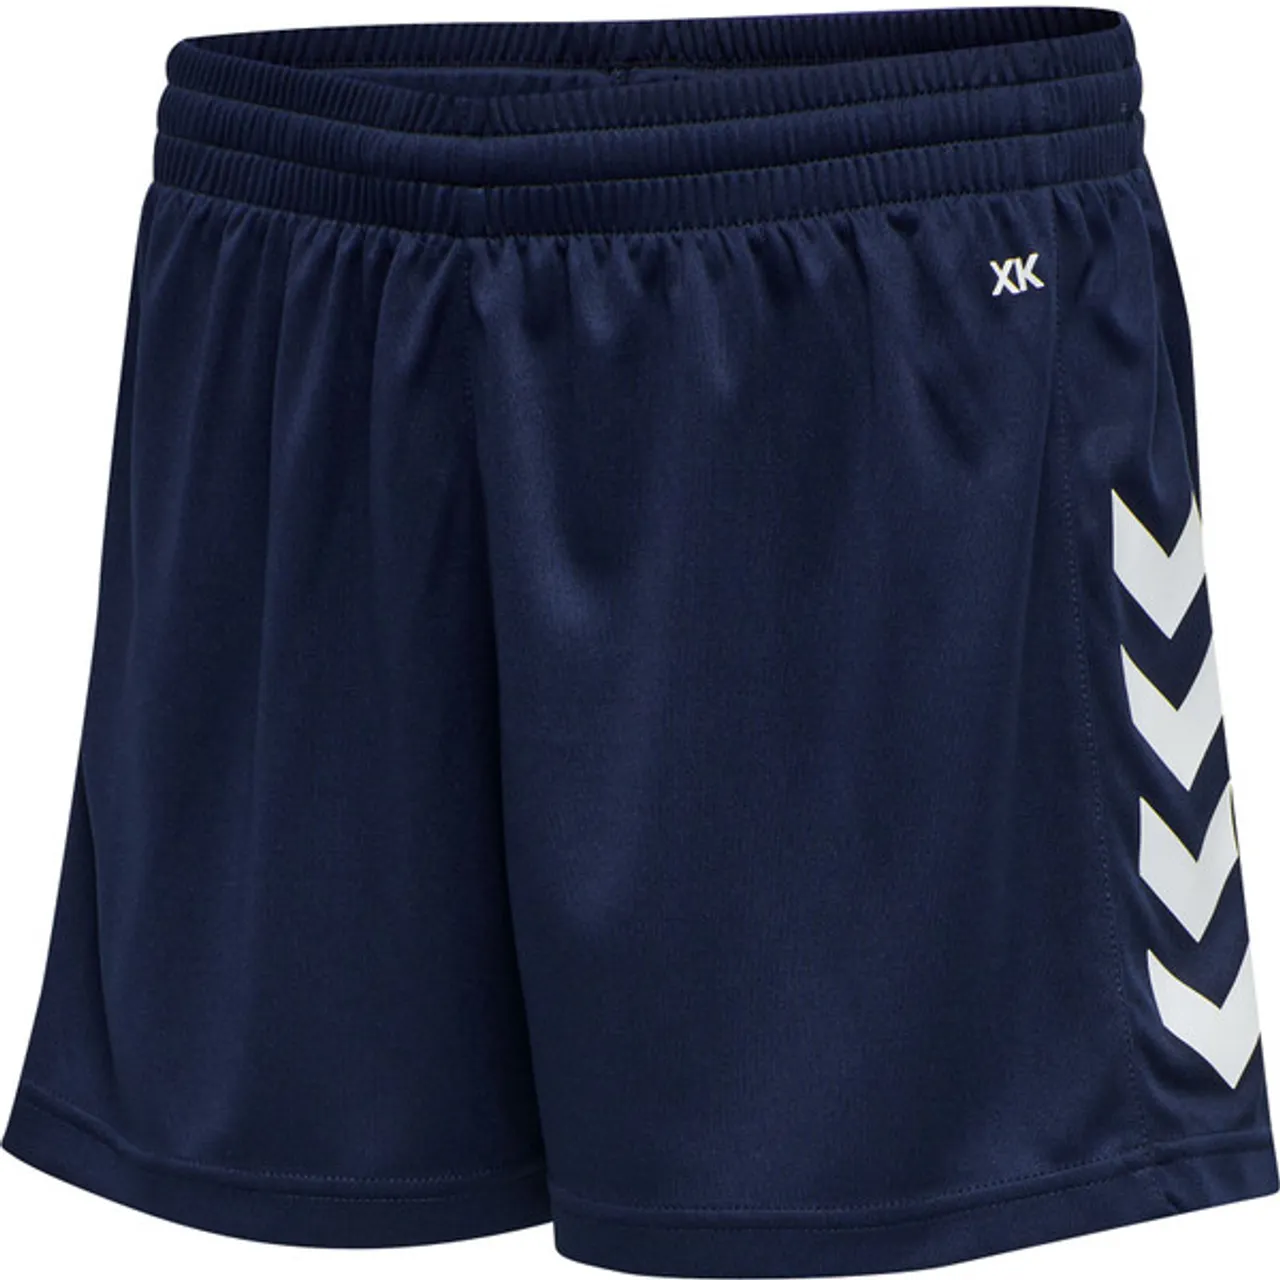 Hummel Core XK Poly Shorts Women